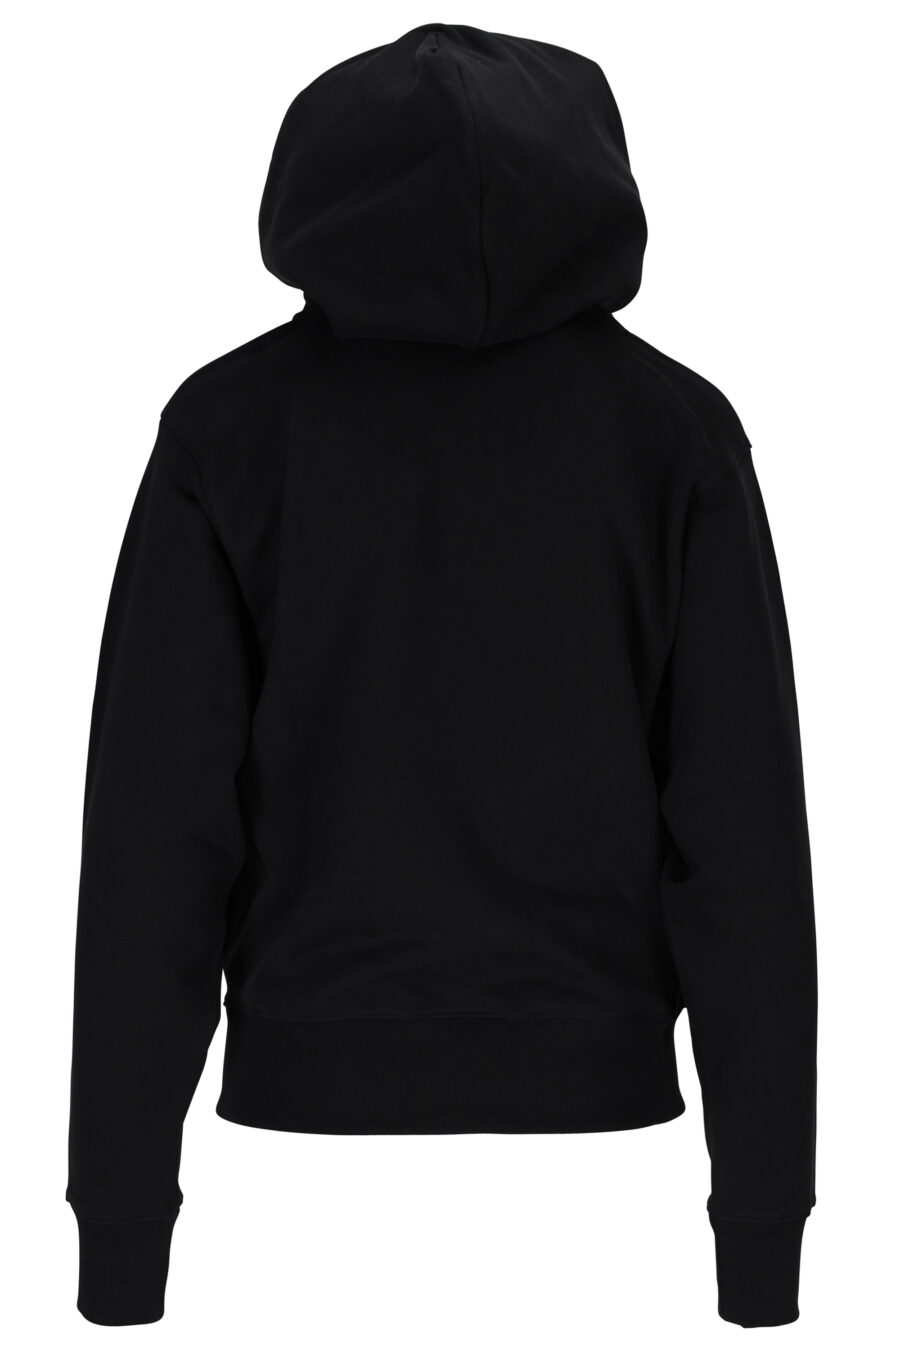 Black hooded sweatshirt with maxilogo "boke flower" - 3612230512559 1